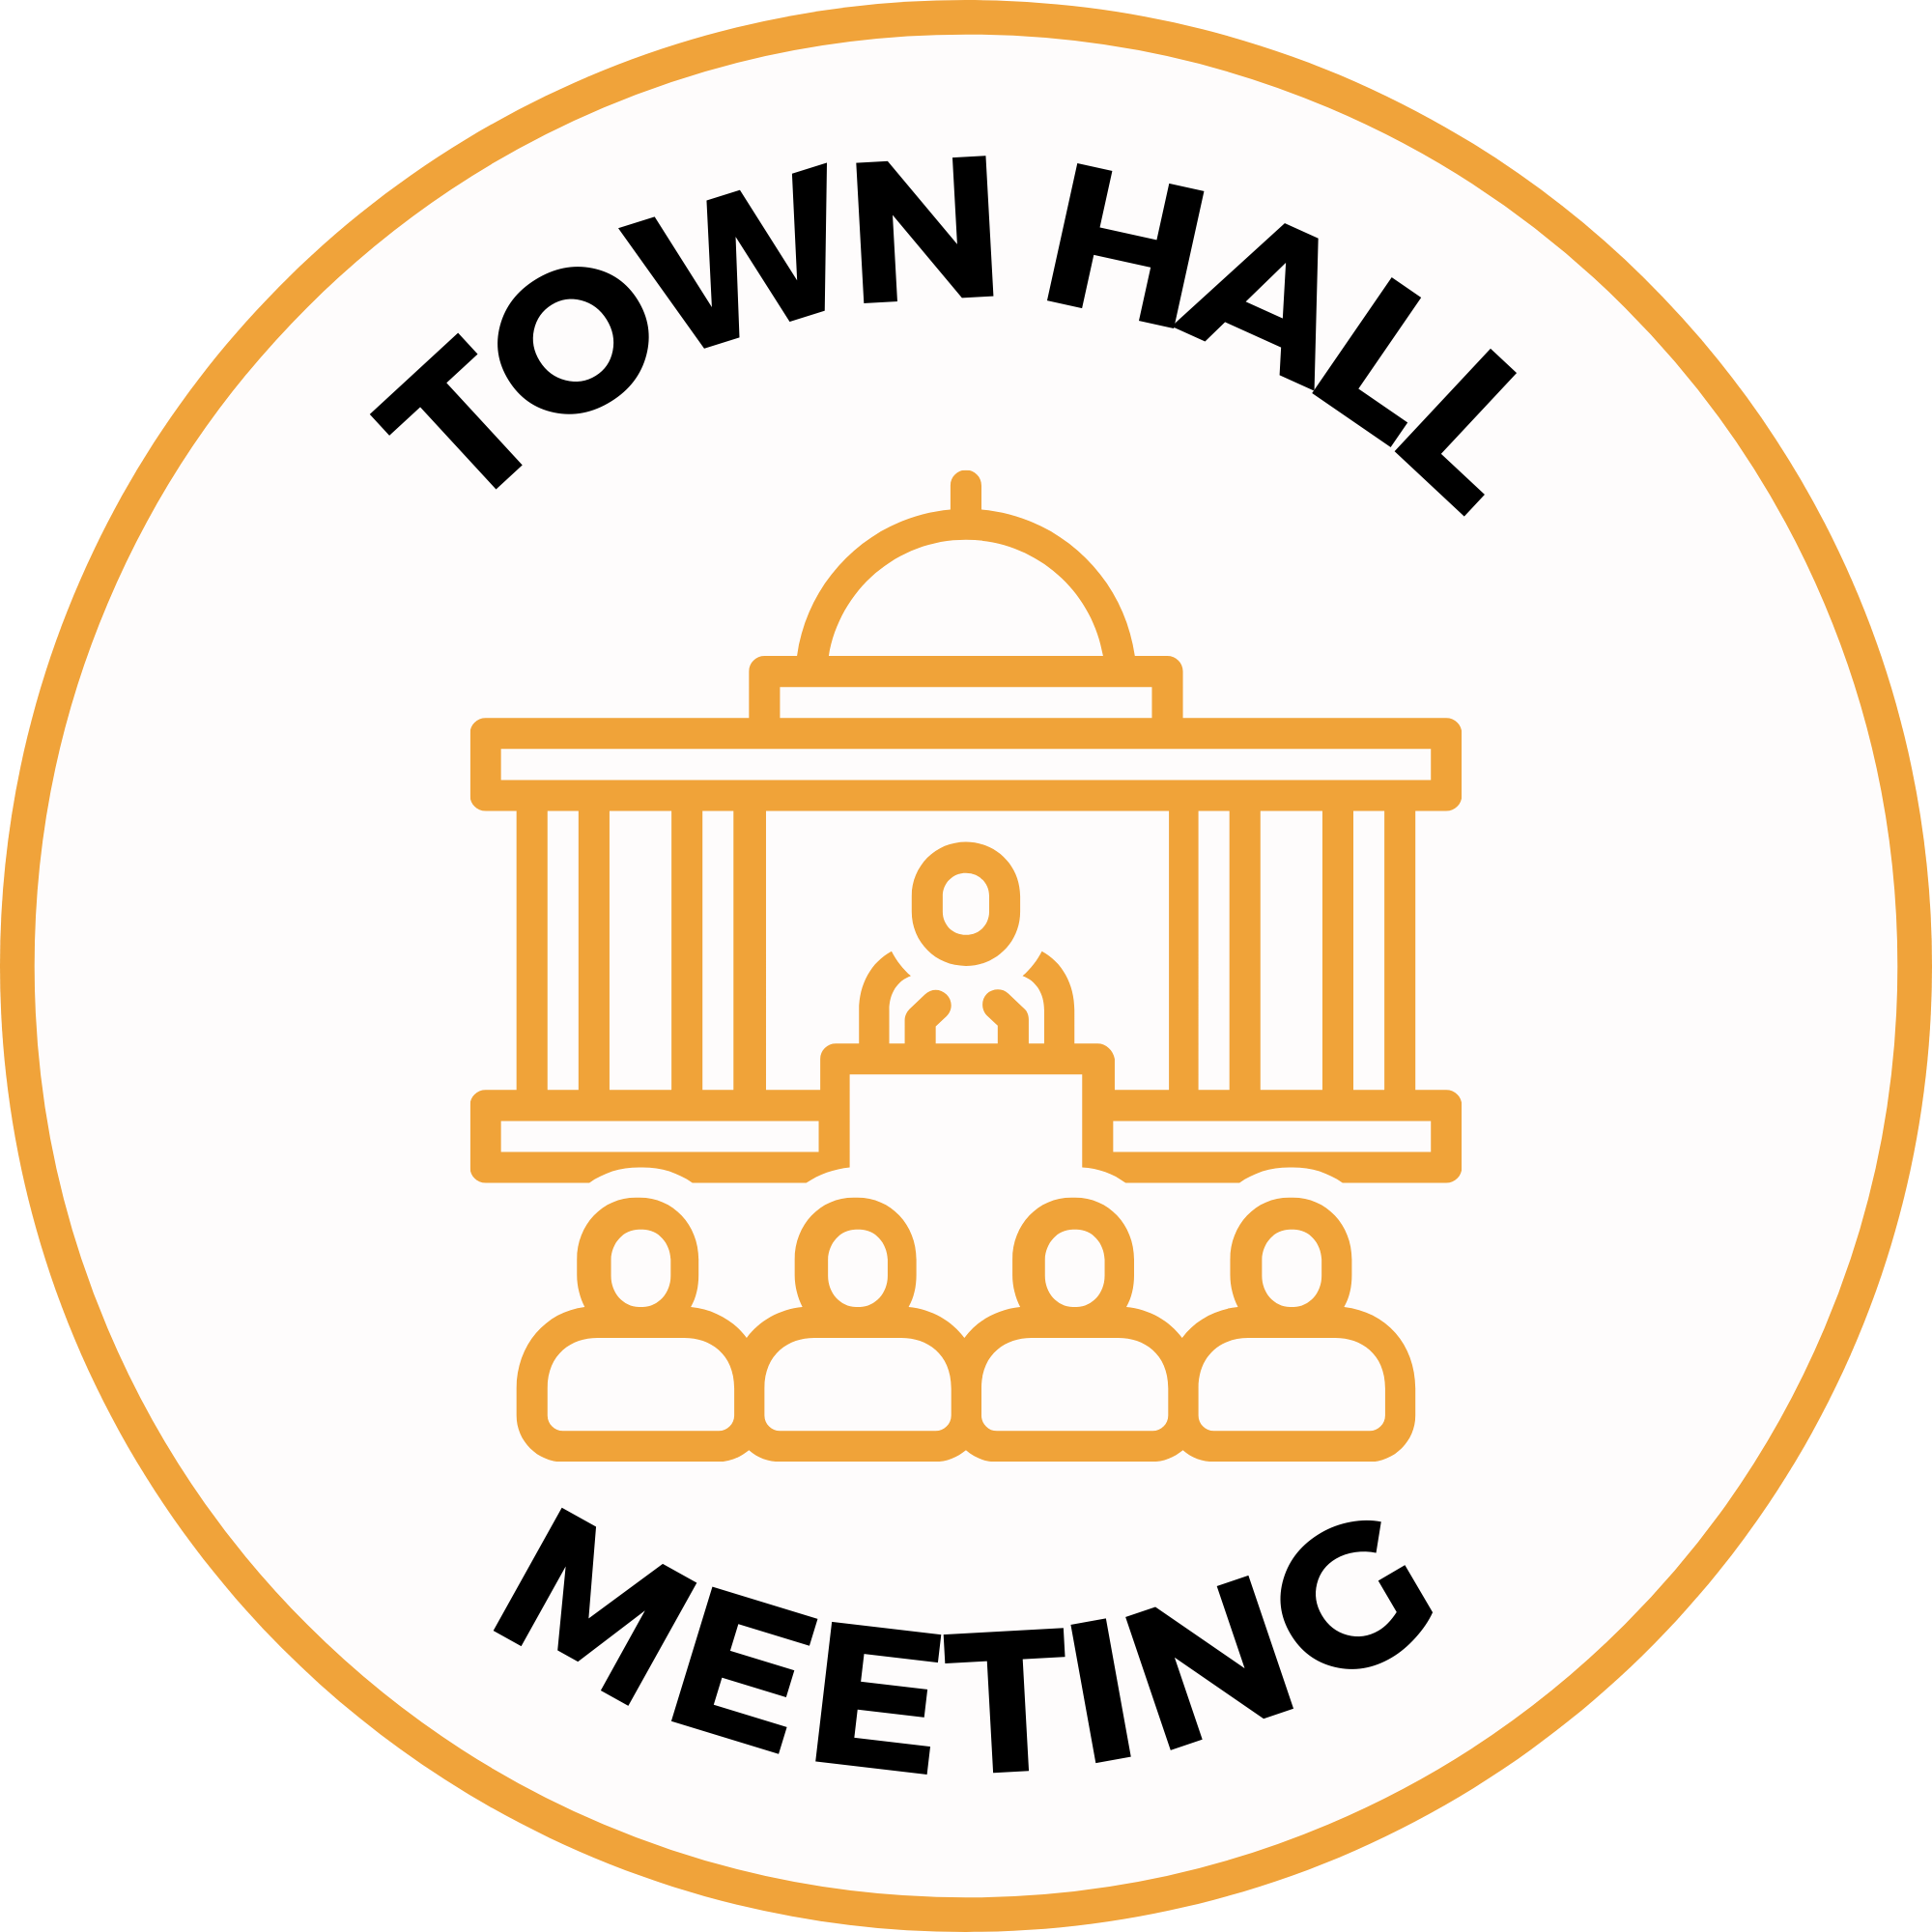 Town Hall Meeting round logo